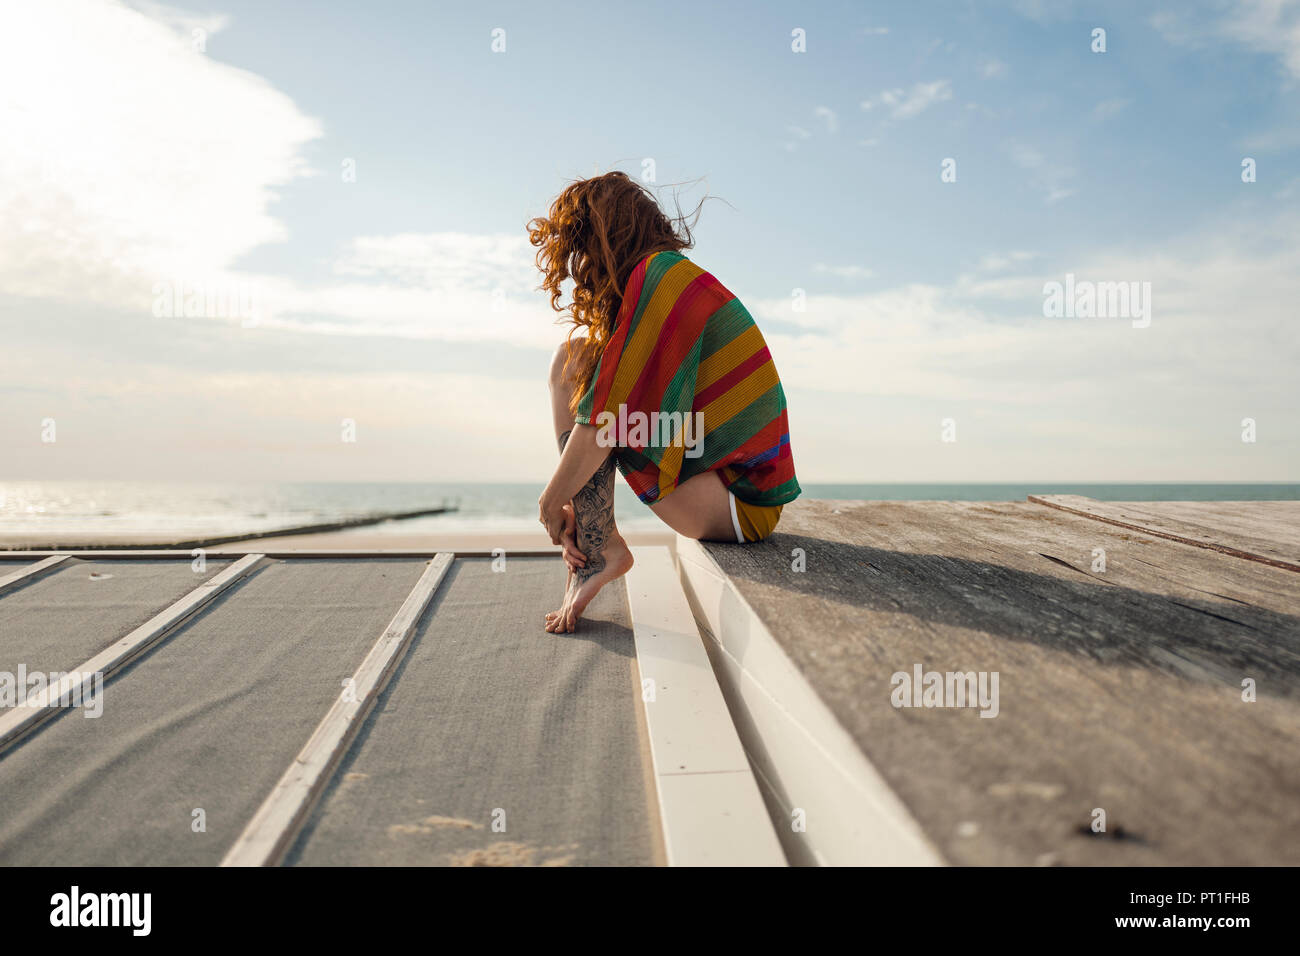 Woman with tattoo accroupi sur planche, regardant la mer Banque D'Images